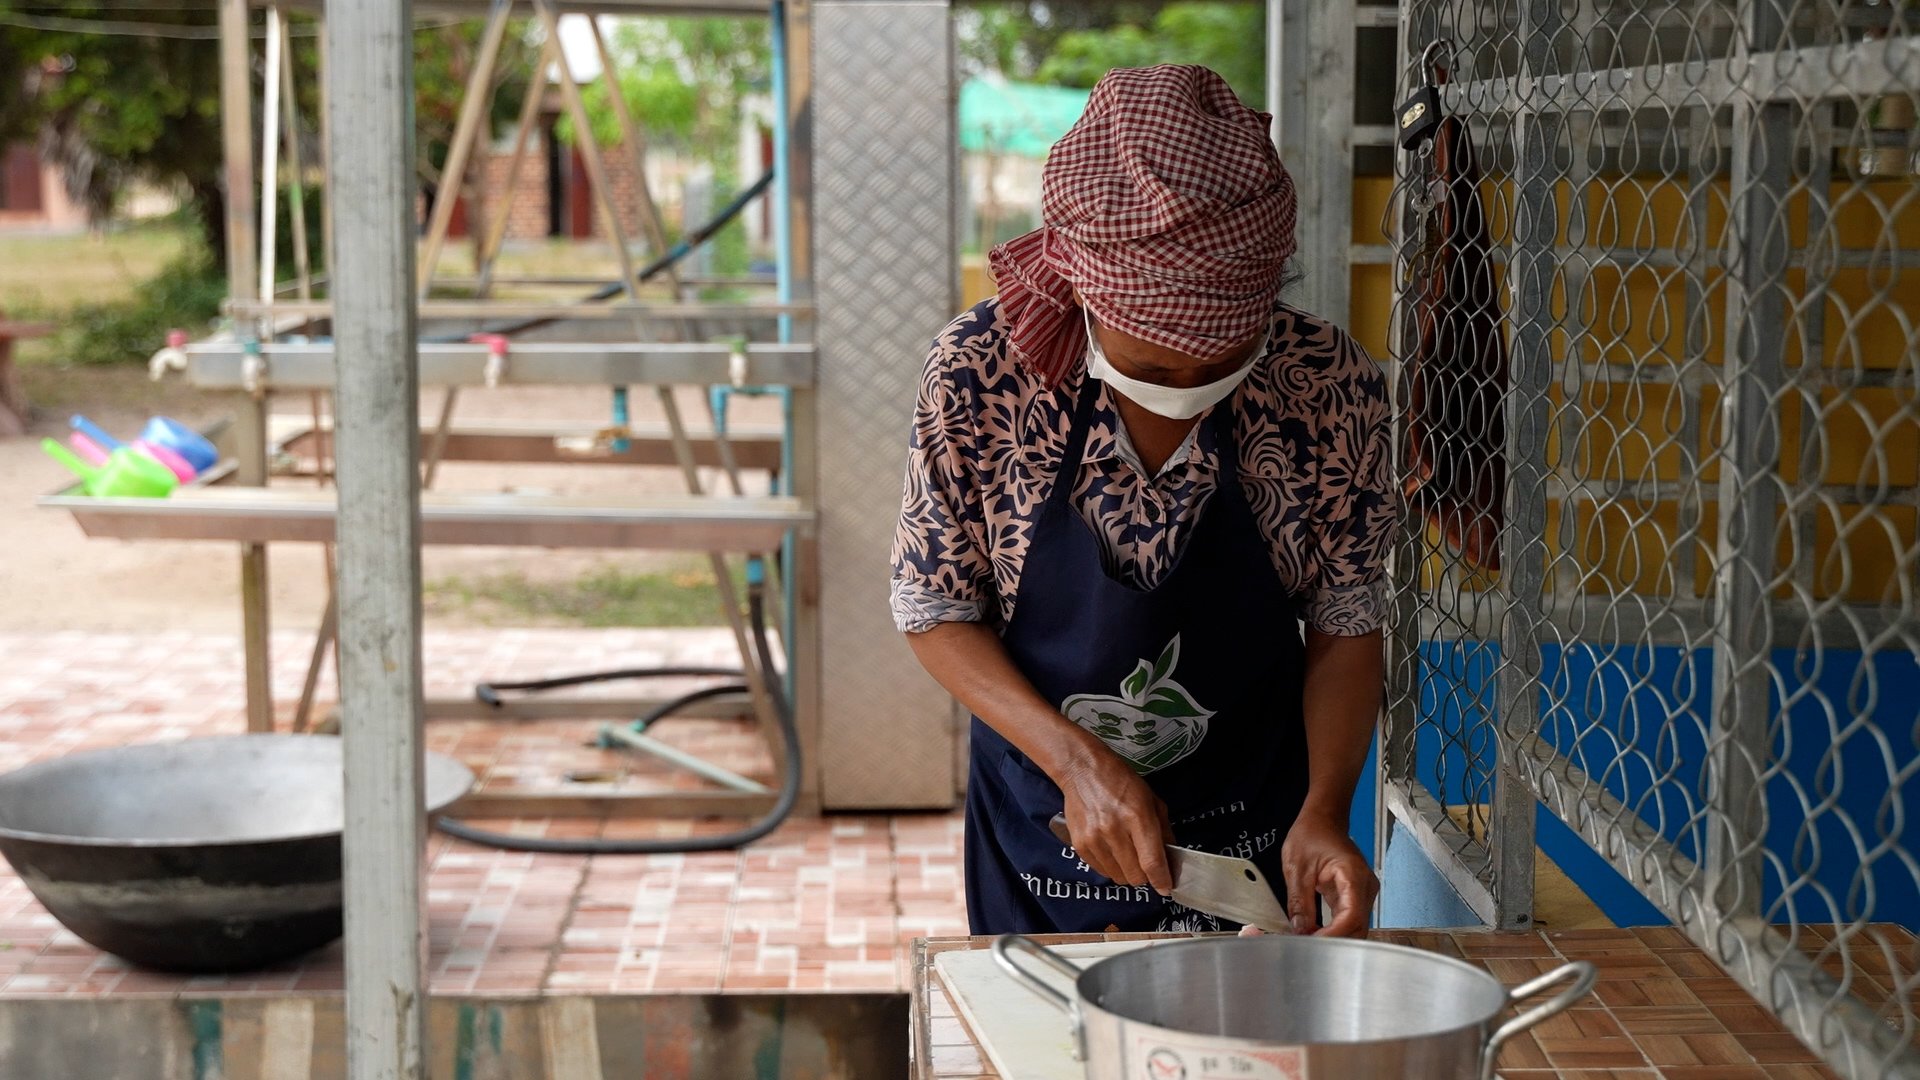 School cook cuts meat, WFP Cambodia School Feeding Program